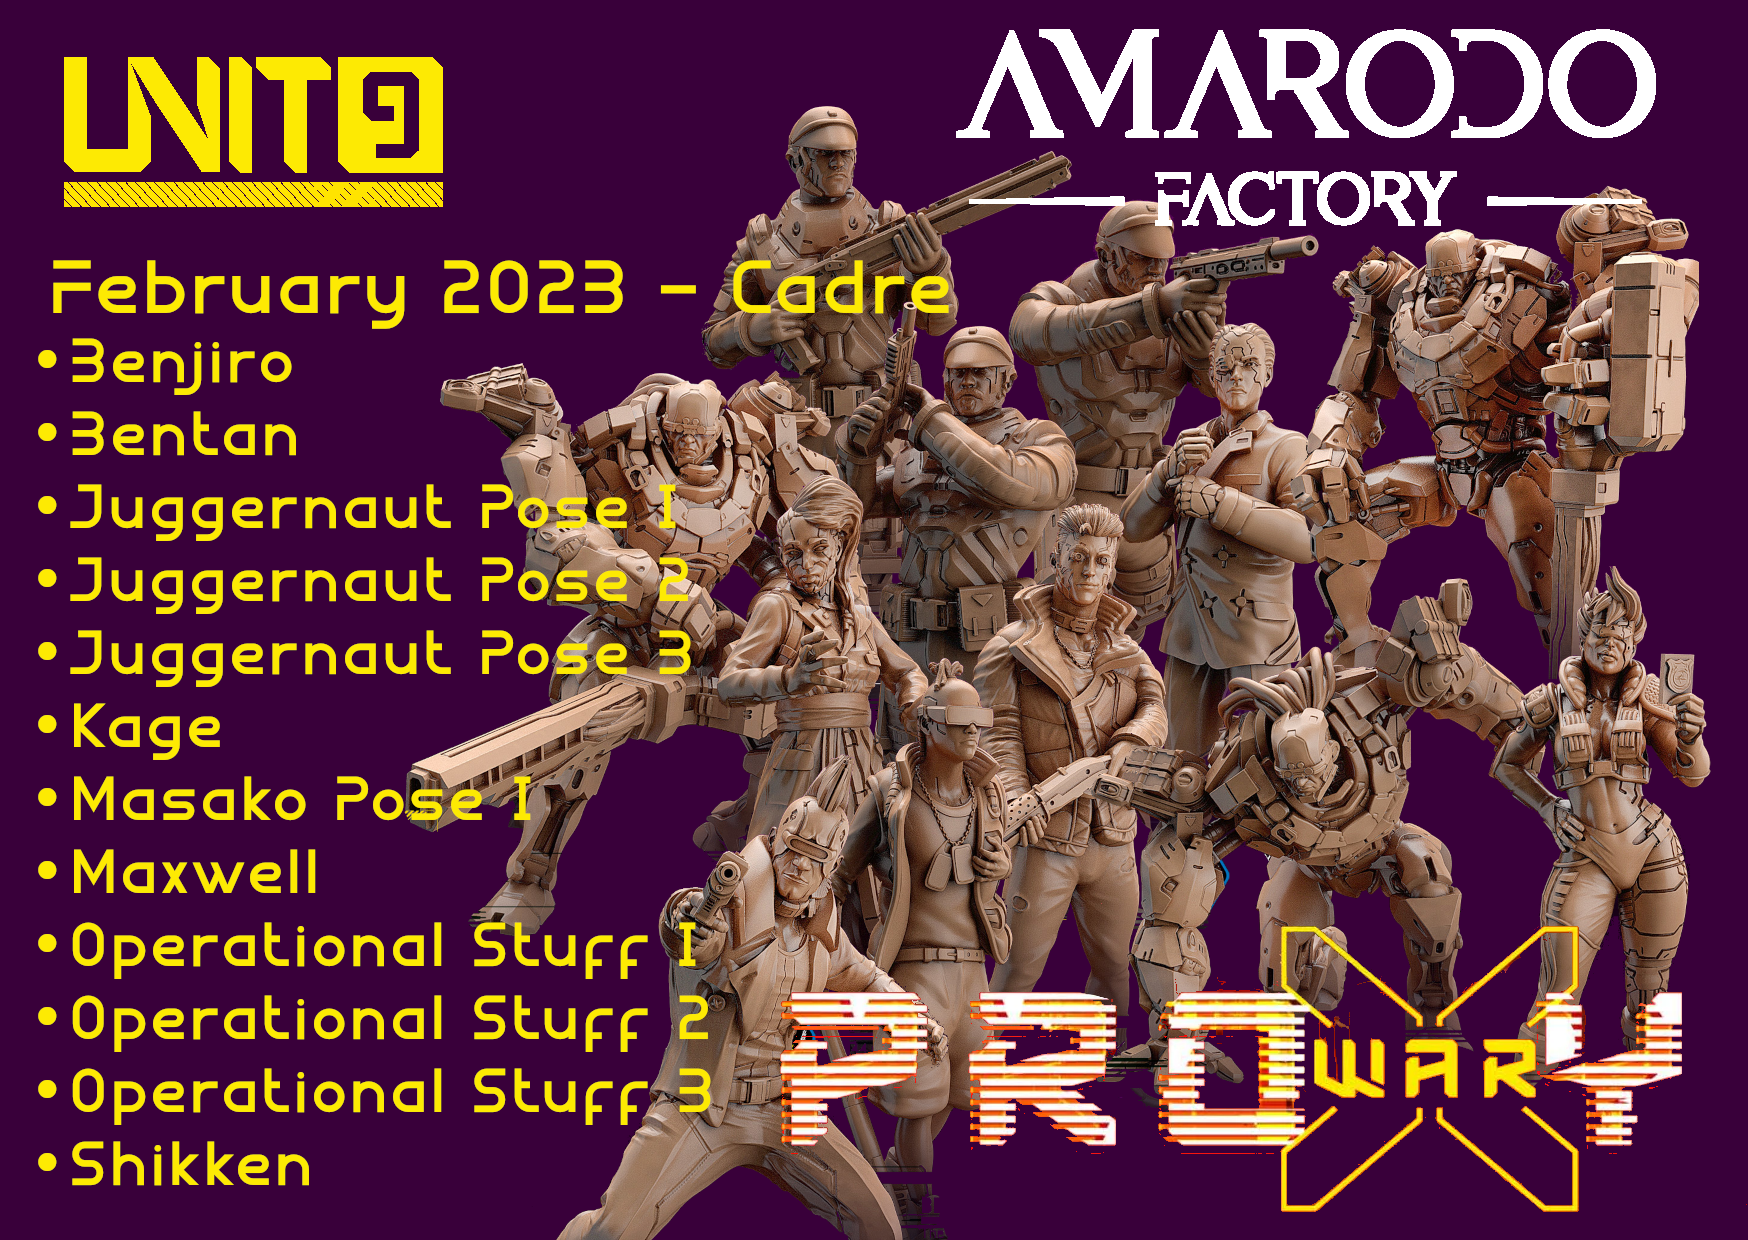 Raid44 & Metal Slammers Proxy War Team - Februar 2023 Unit9 Kader